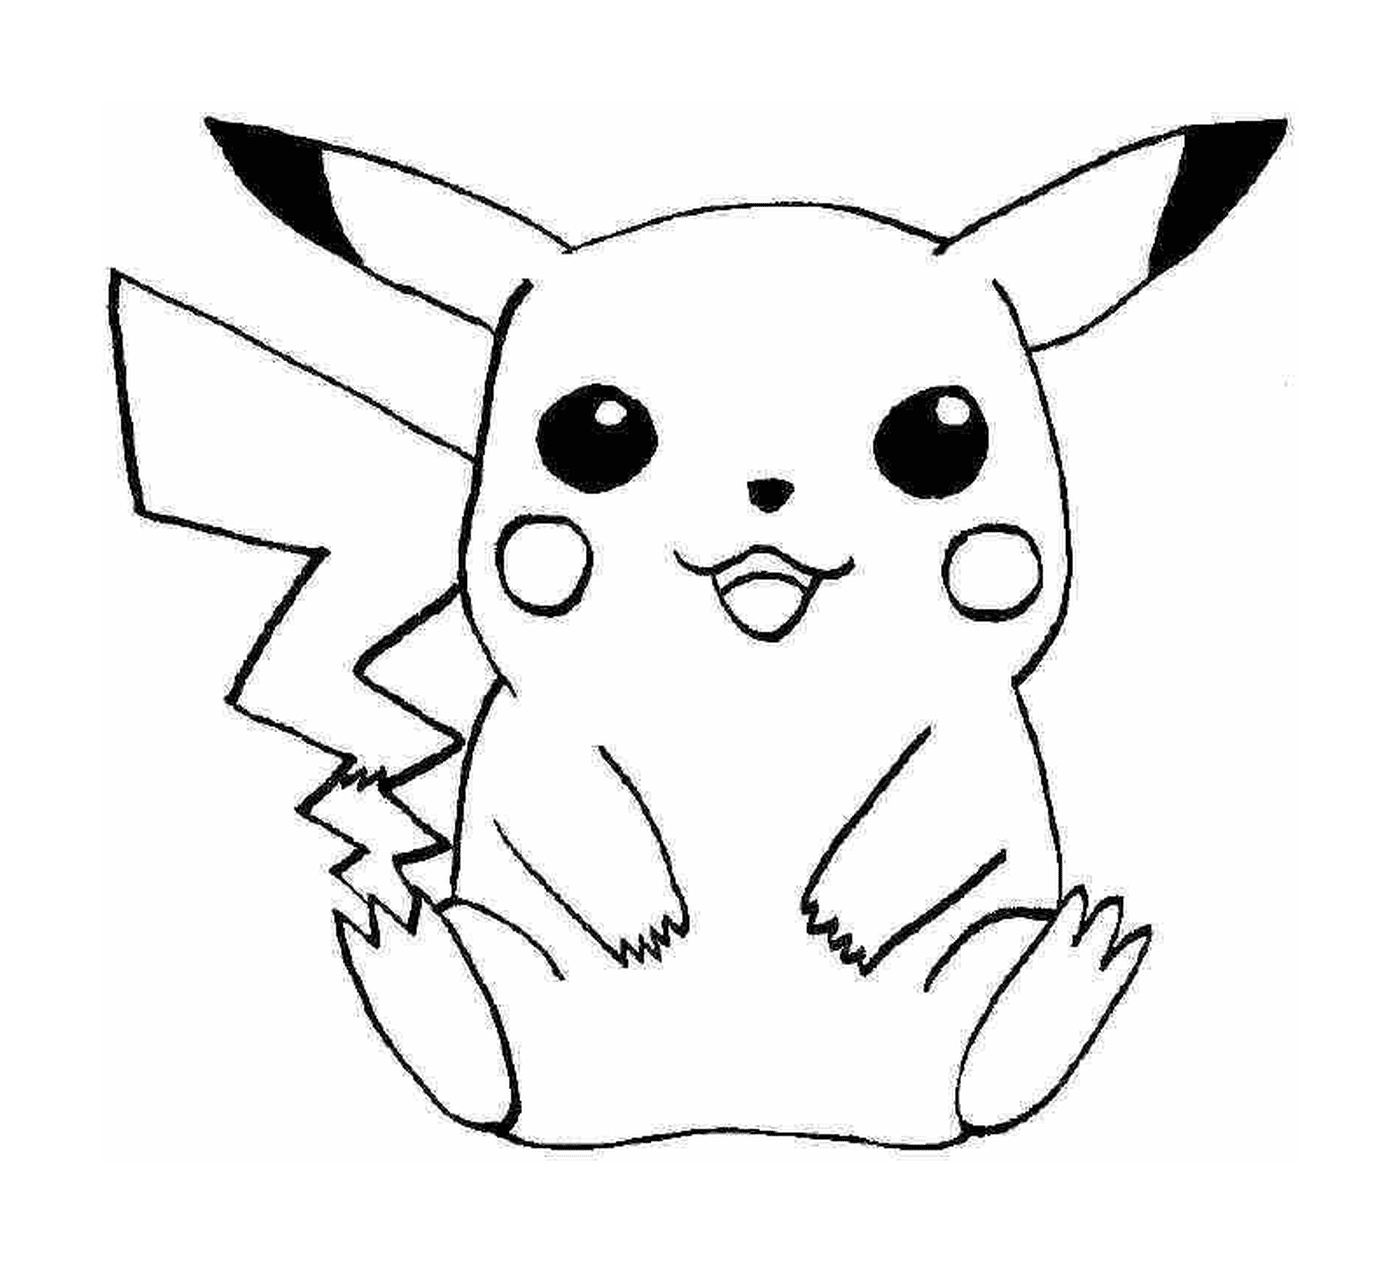  Pikachu, symbol of adorability 